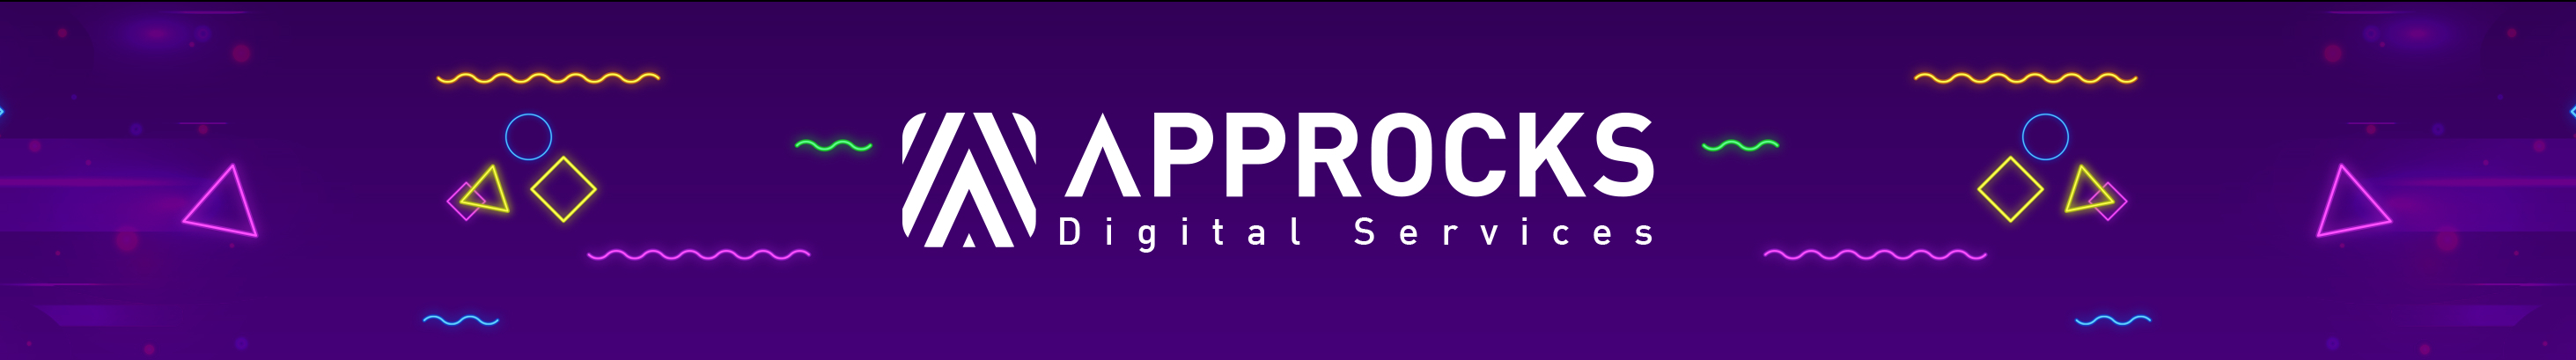 Approcks Co's profile banner